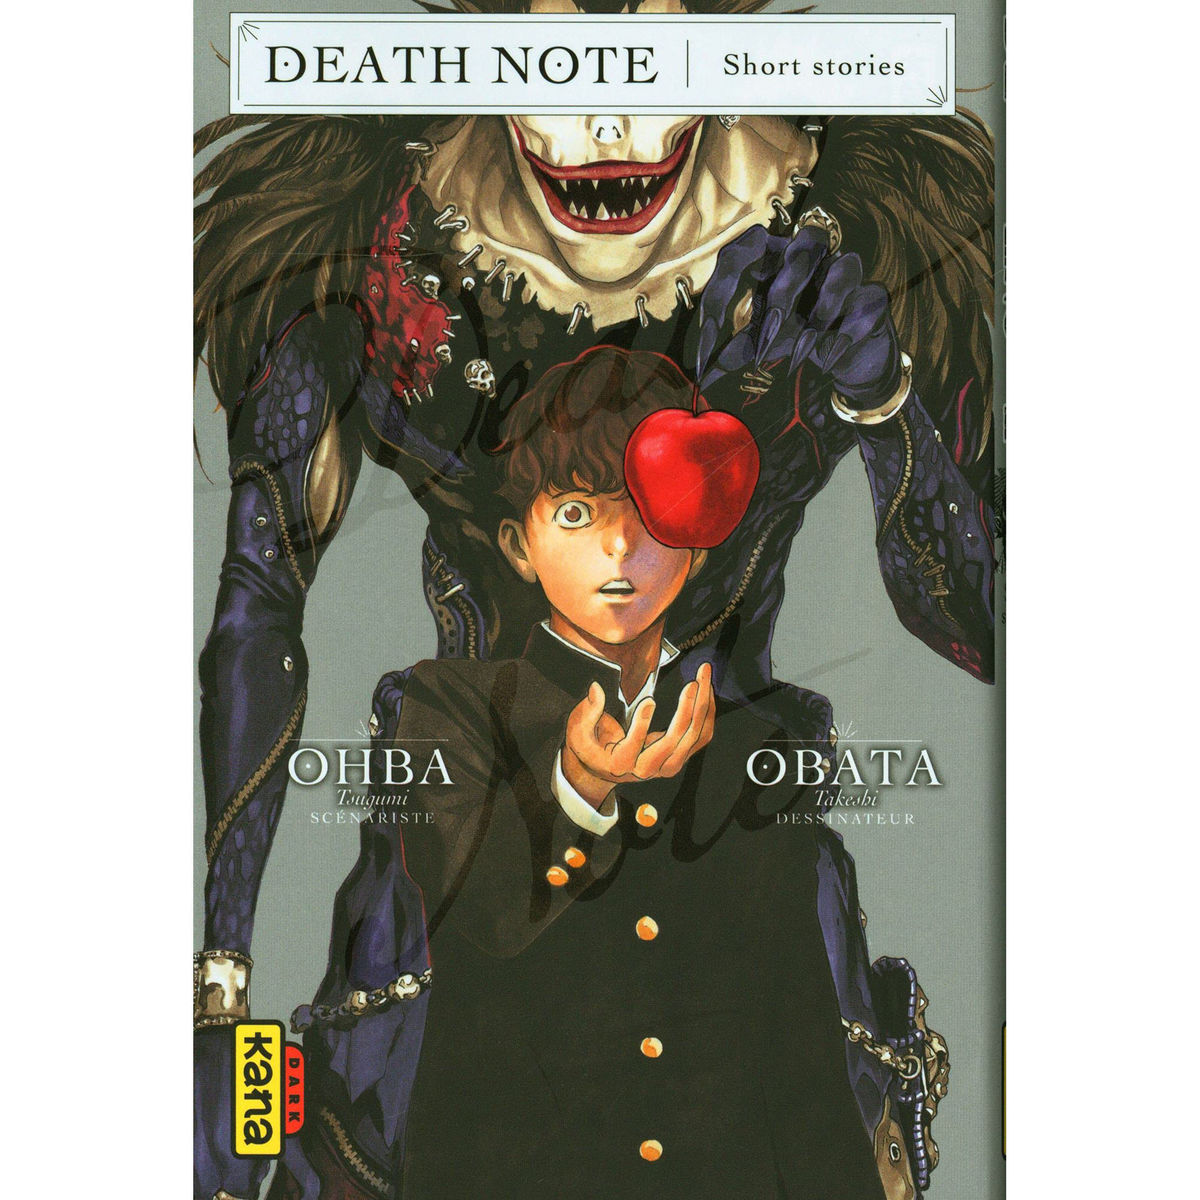 Death Note - Short stories (FR)